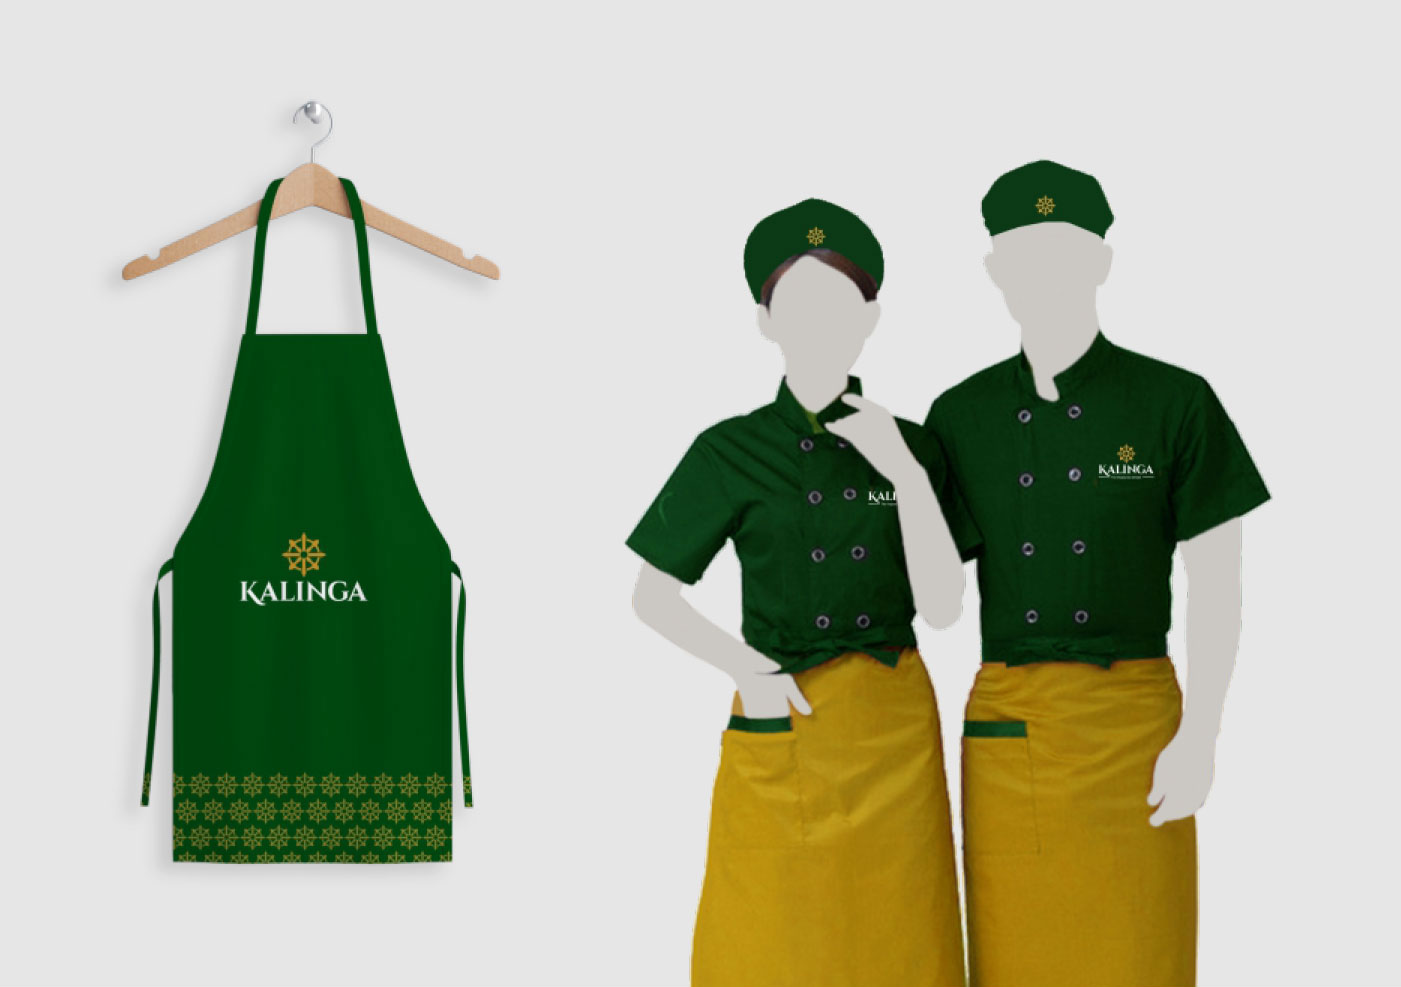 Kalinga Staff uniform